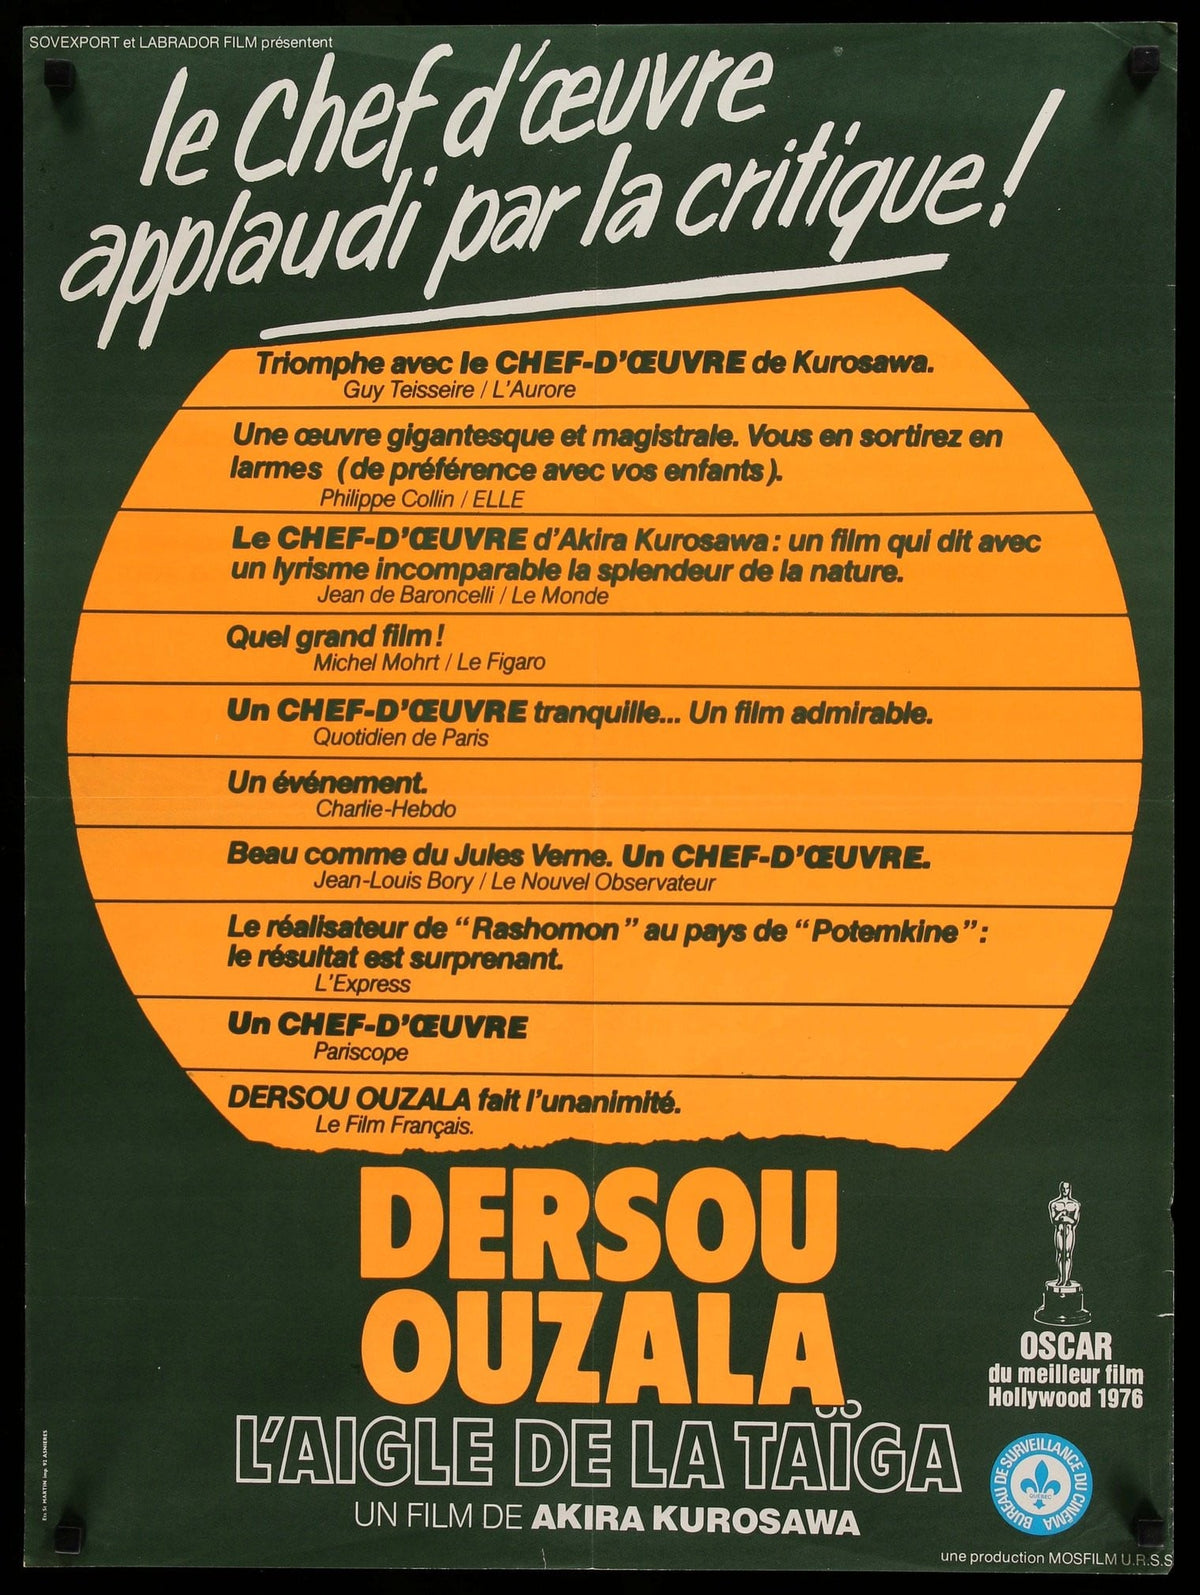 Dersu Uzala (1975) original movie poster for sale at Original Film Art